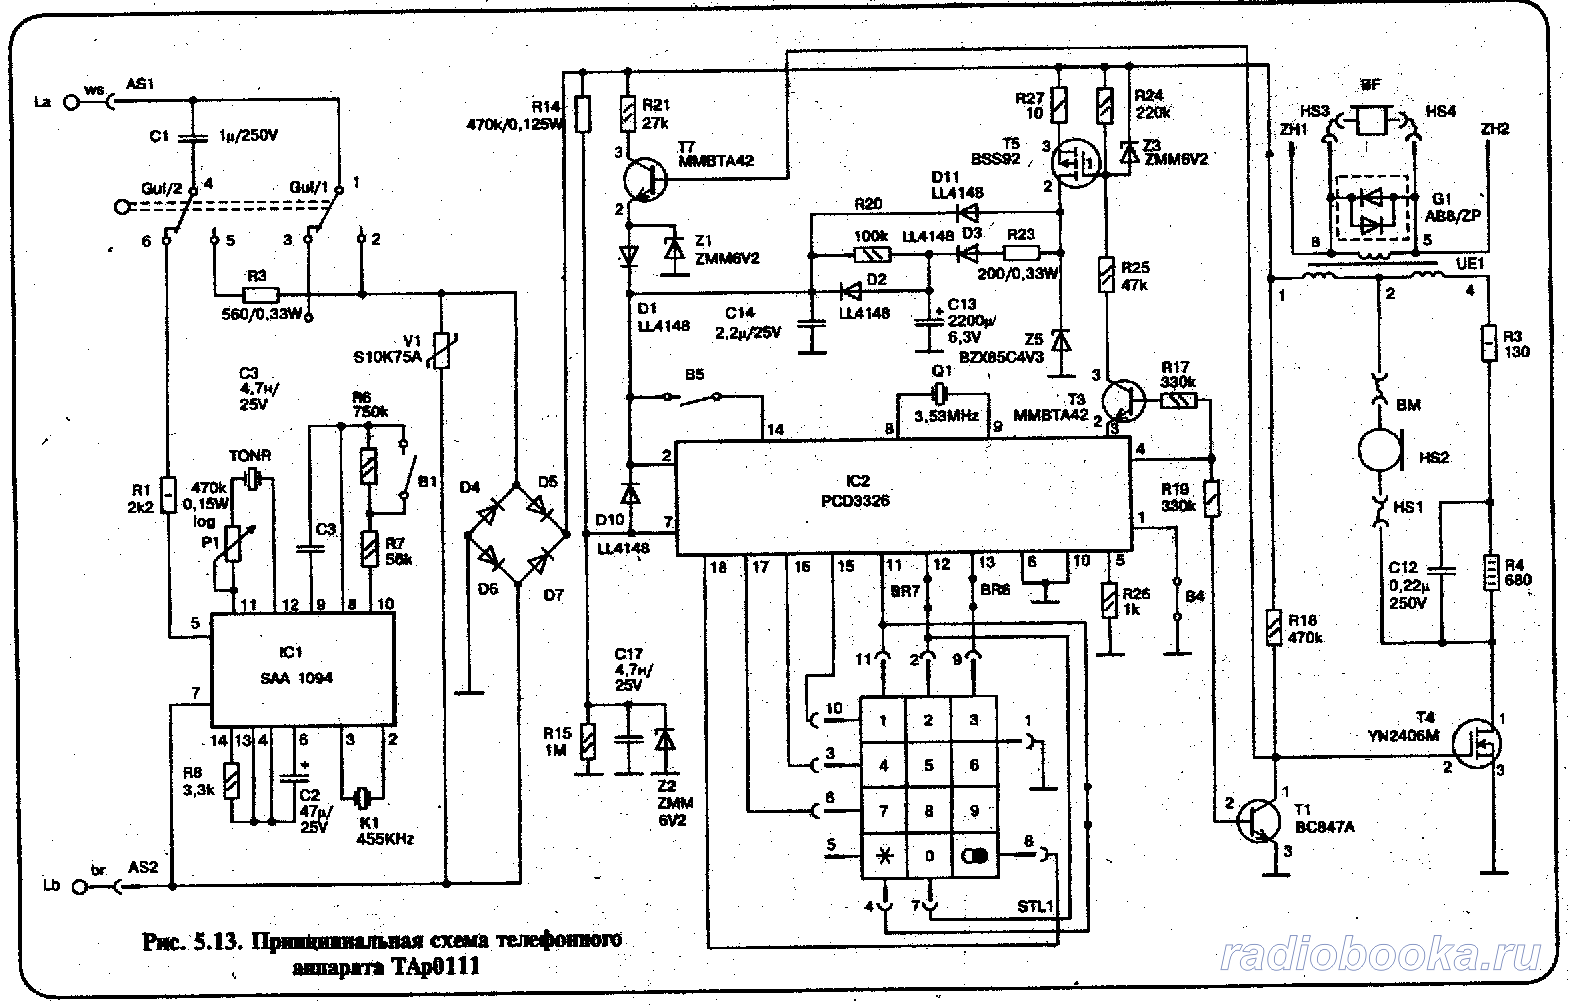 Схема телефонного аппарата ТАр-0111